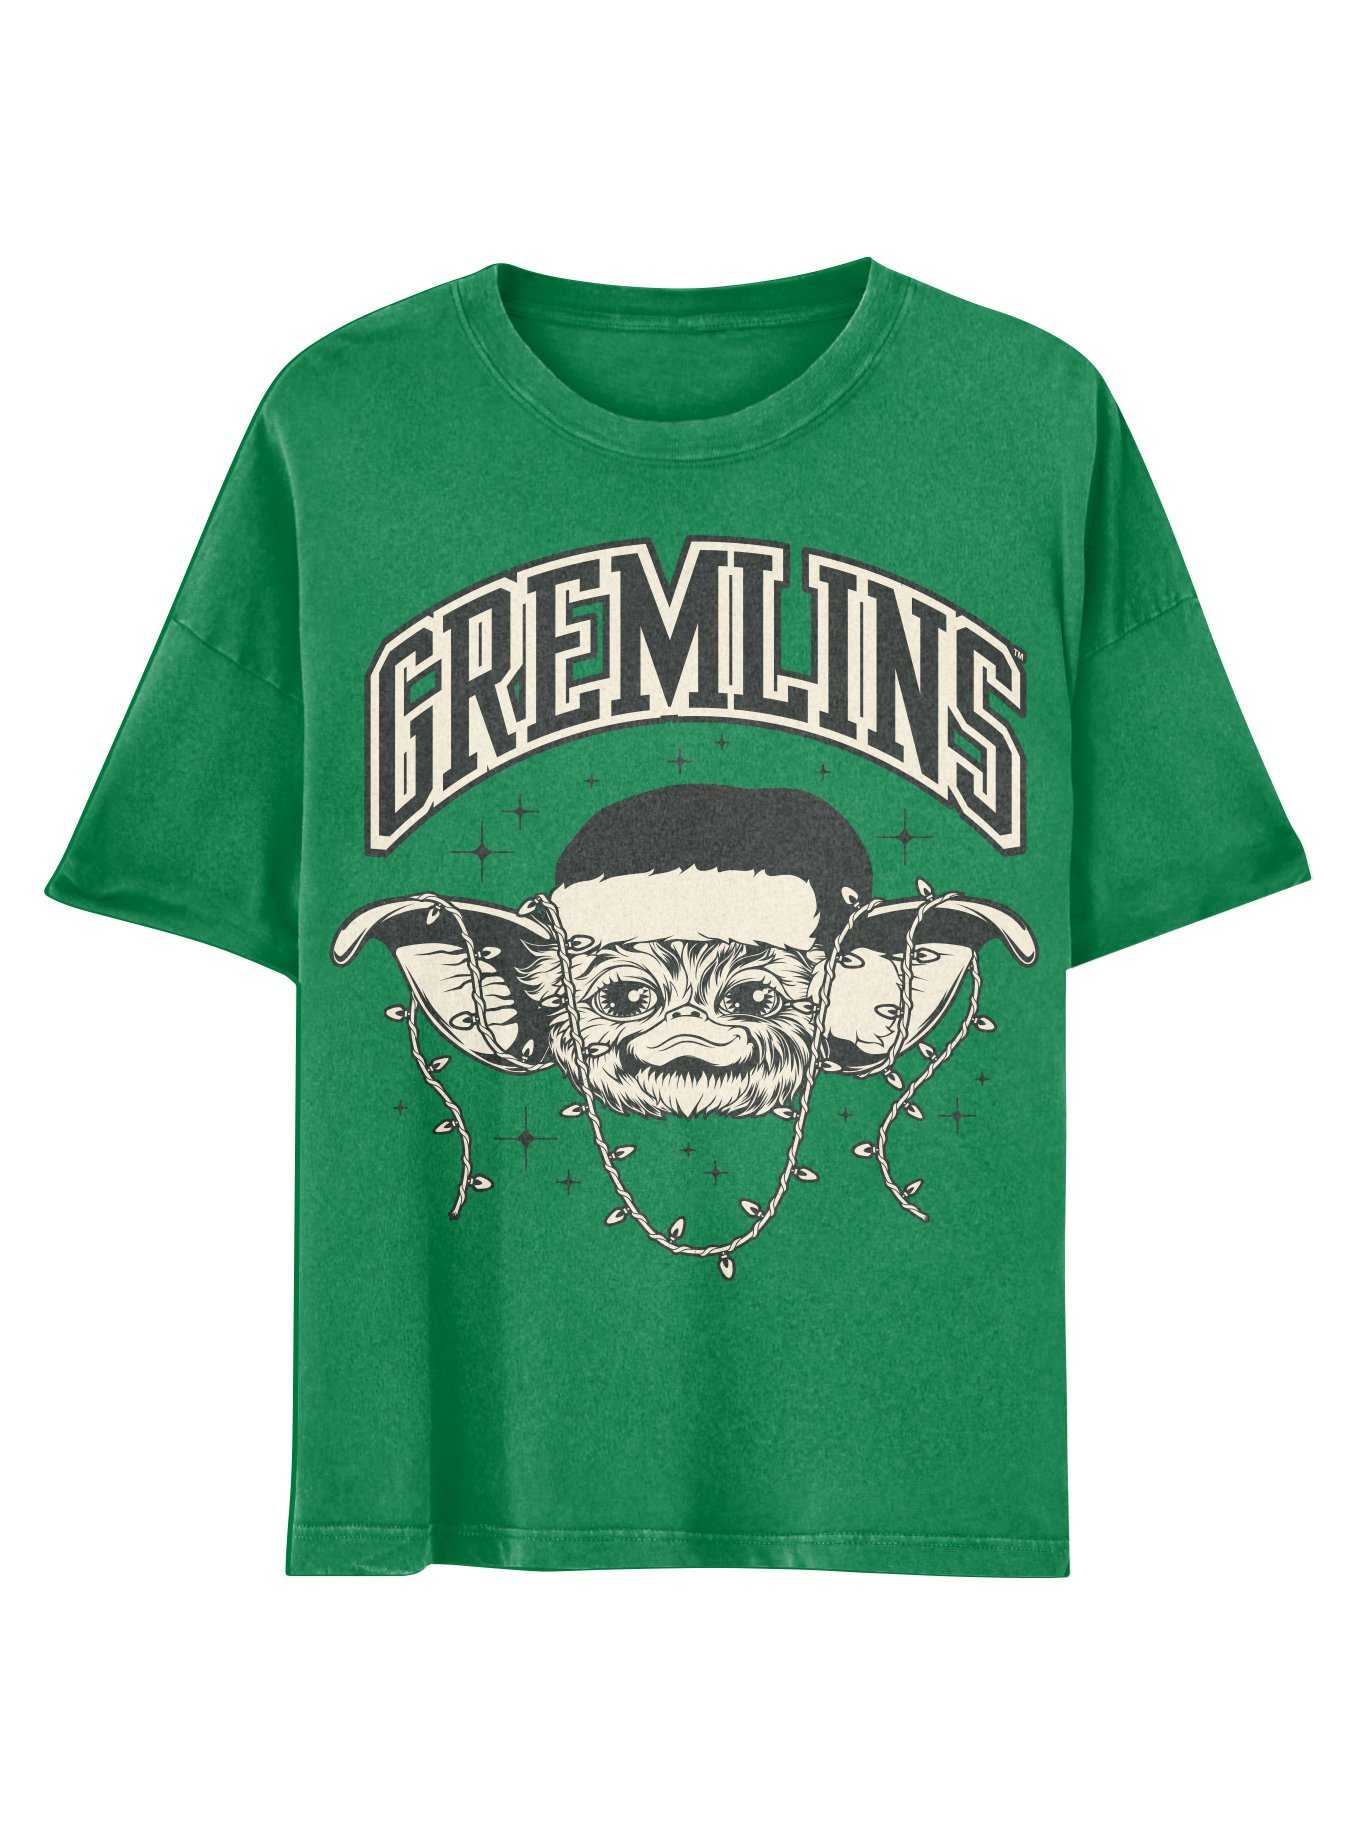 Gremlins Gizmo Holiday Boyfriend Fit Girls T-Shirt, , hi-res